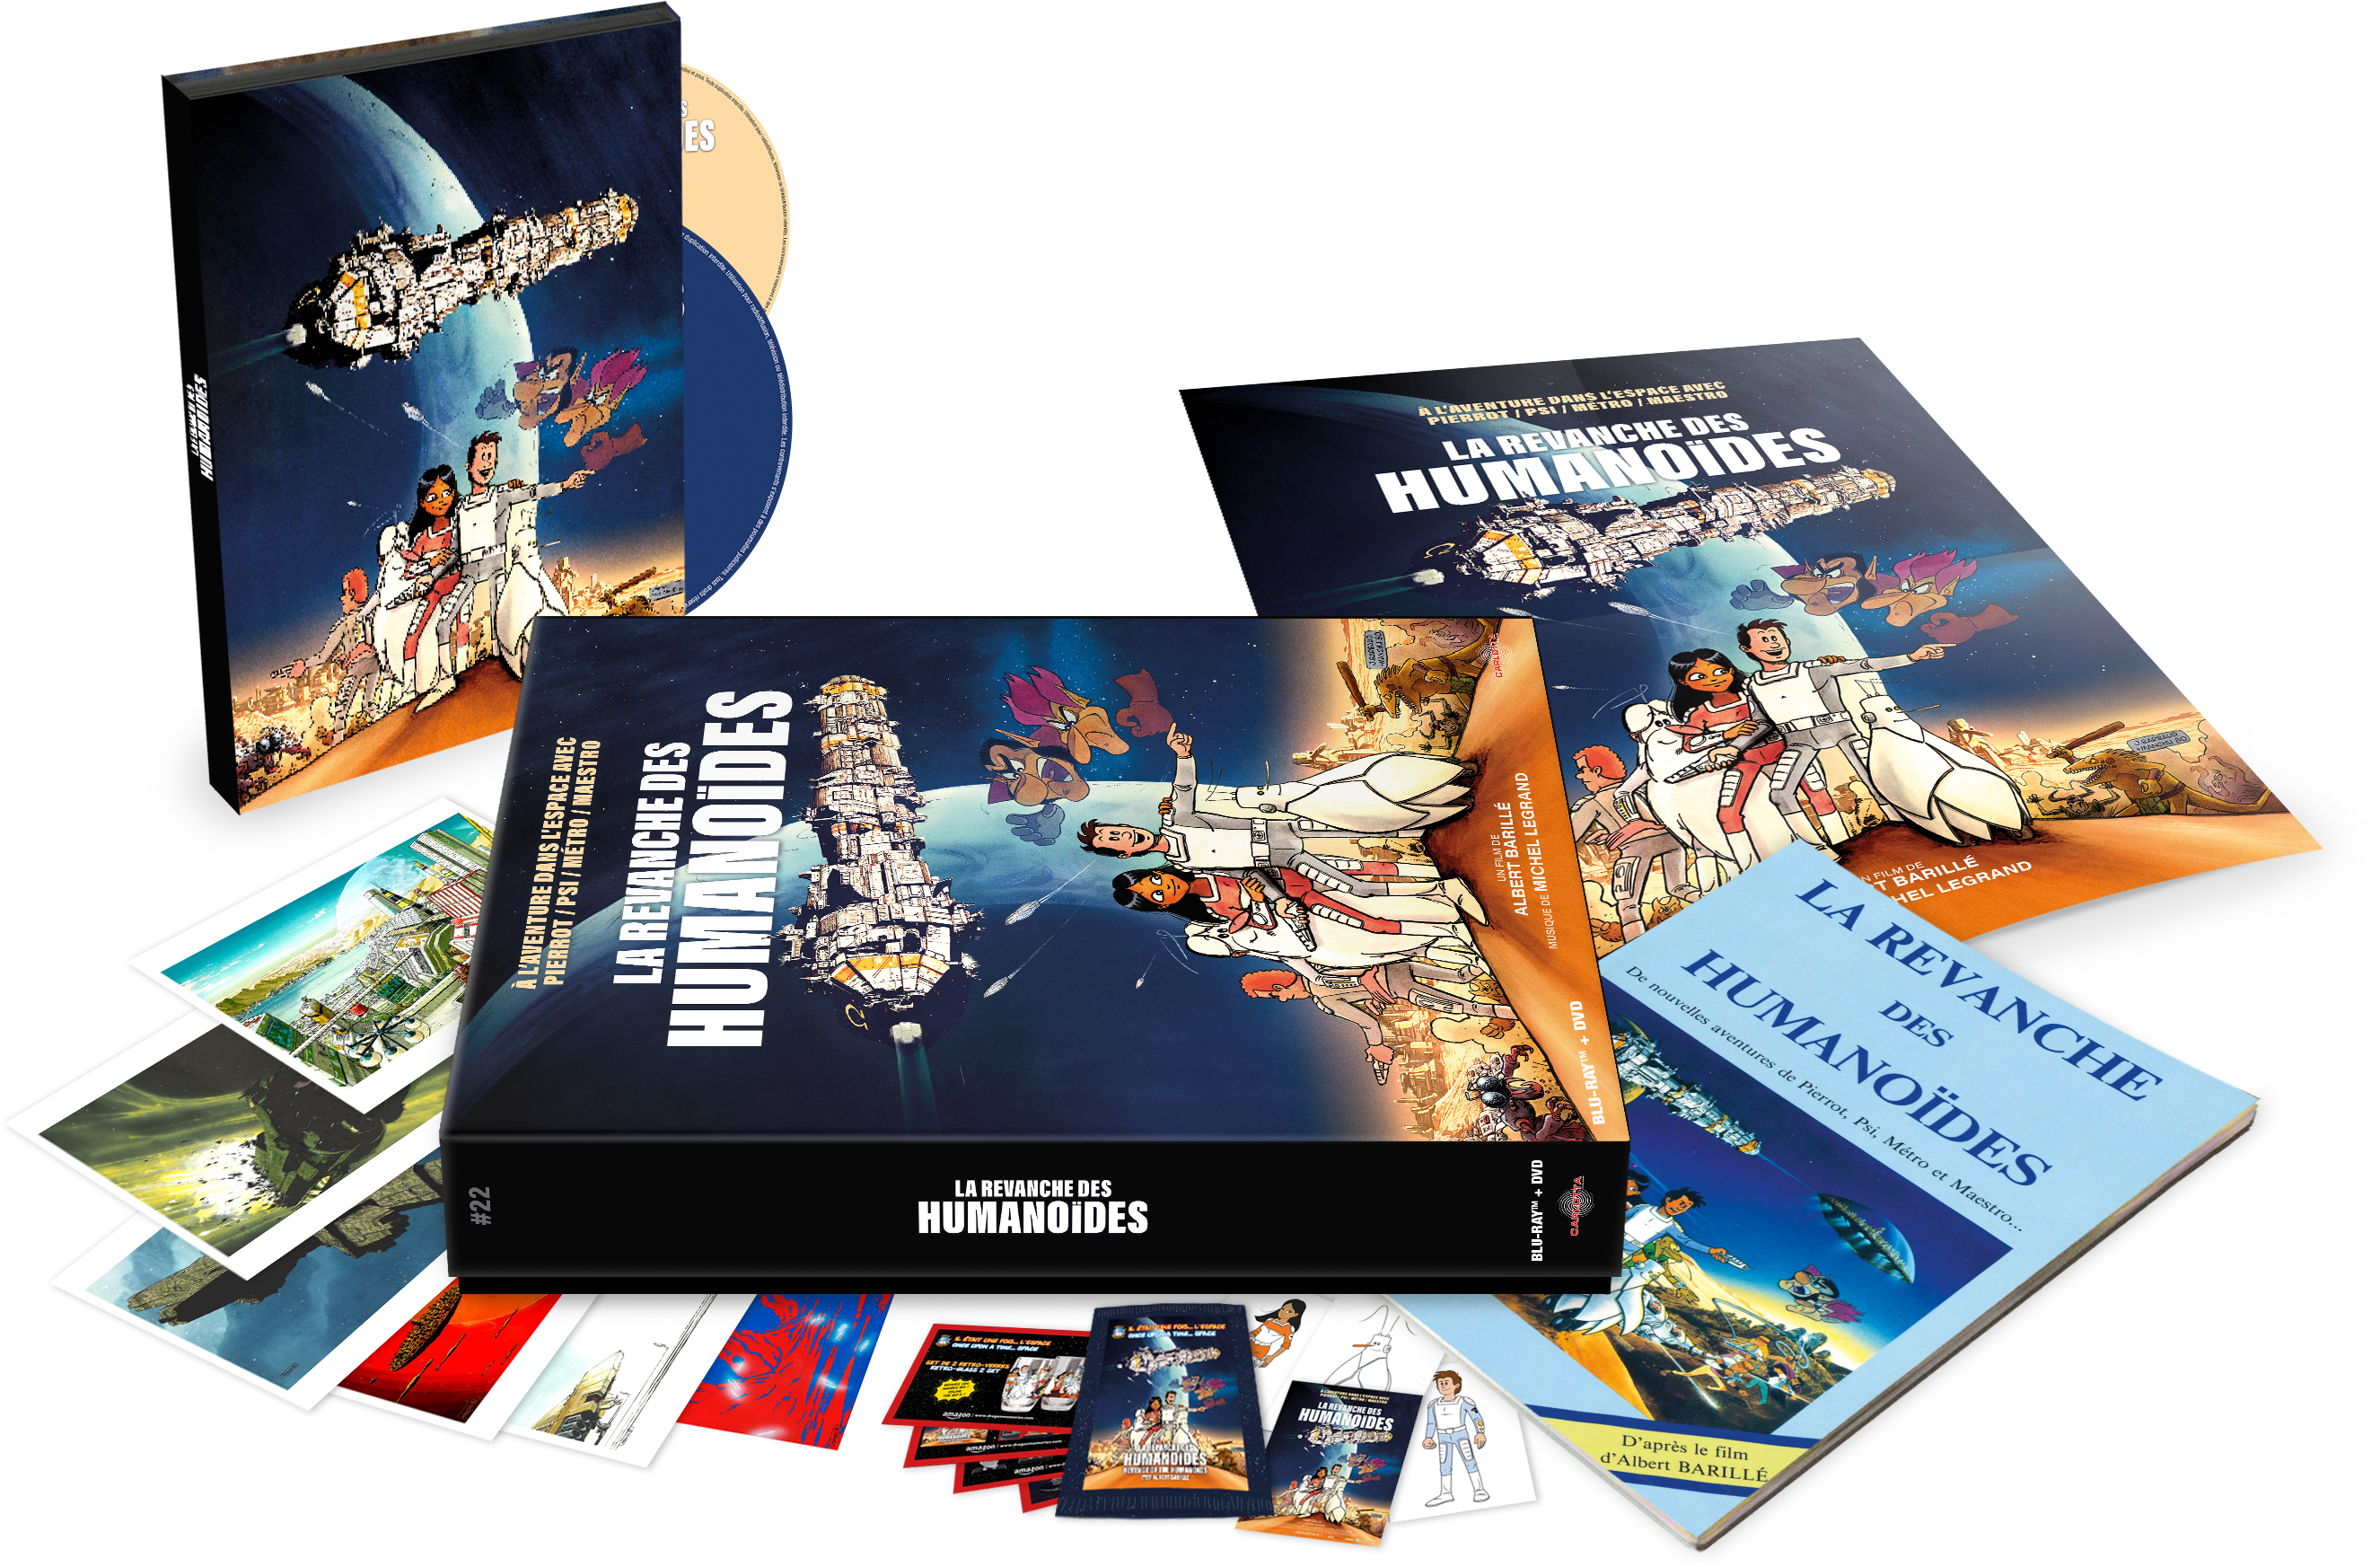 Revenge of the Humanoids - Prestige Limited Edition Combo Blu-ray + DVD + Memorabilia